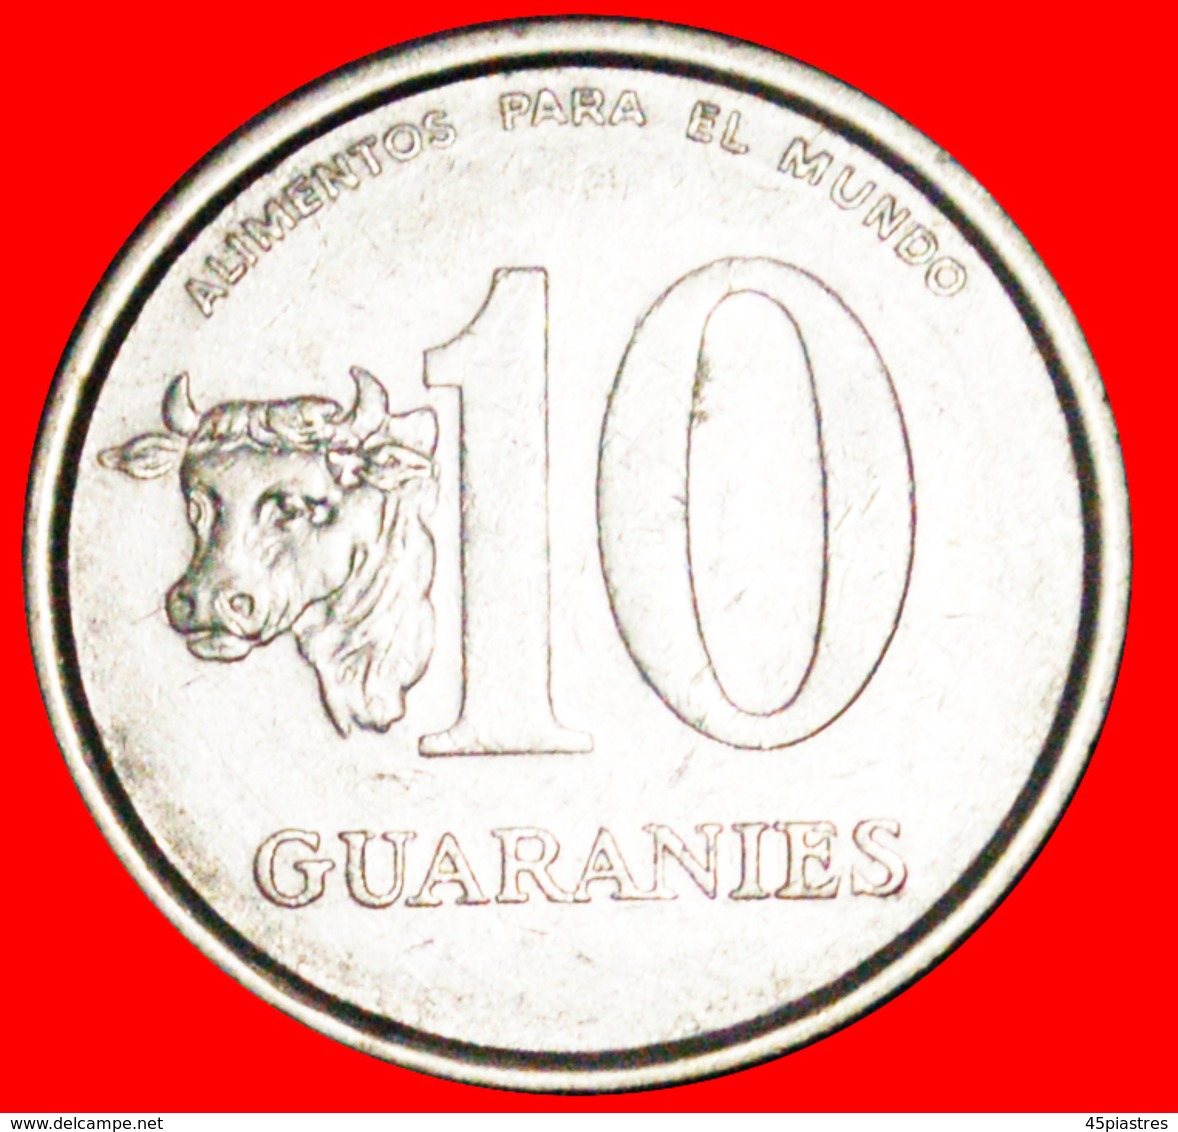 # BRAZIL: PARAGUAY ★ 10 GUARANIES 1978 FAO COW! LOW START ★ NO RESERVE! - Paraguay